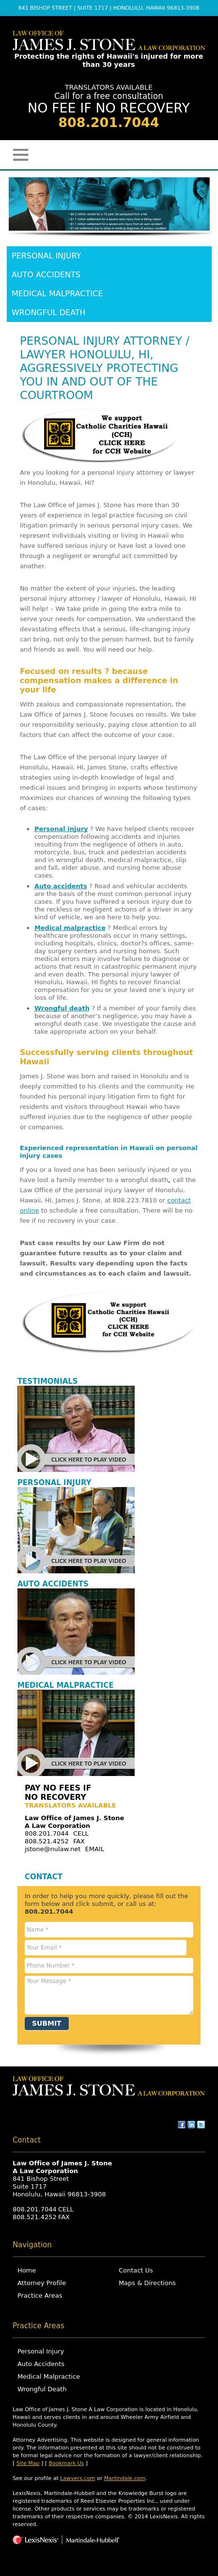 Stone James J Law Offices Of - Honolulu HI Lawyers